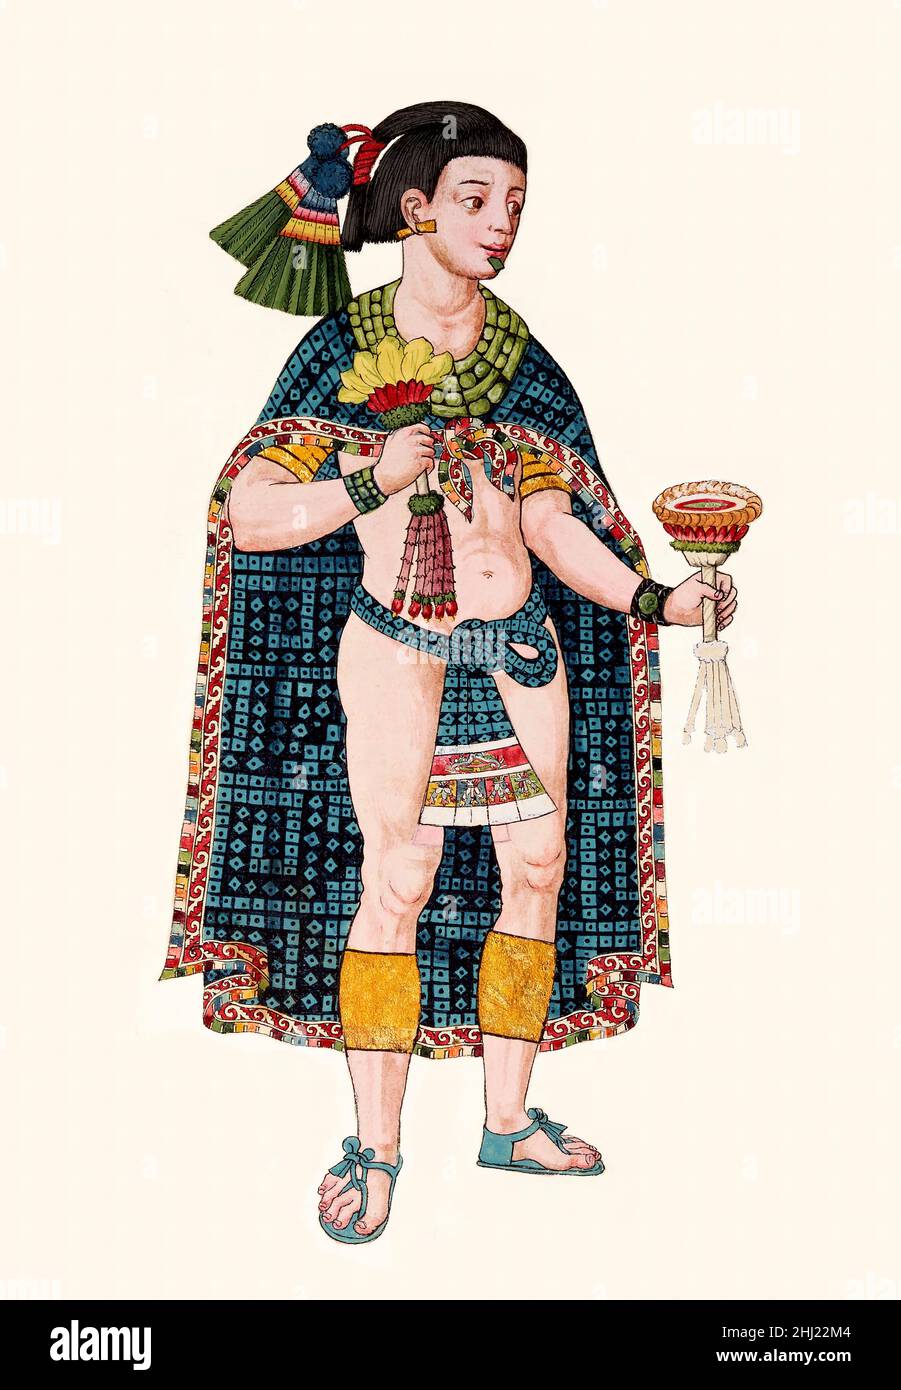 Nezahualpilli, gobernante de Texcoco, Imperio Azteca Foto de stock